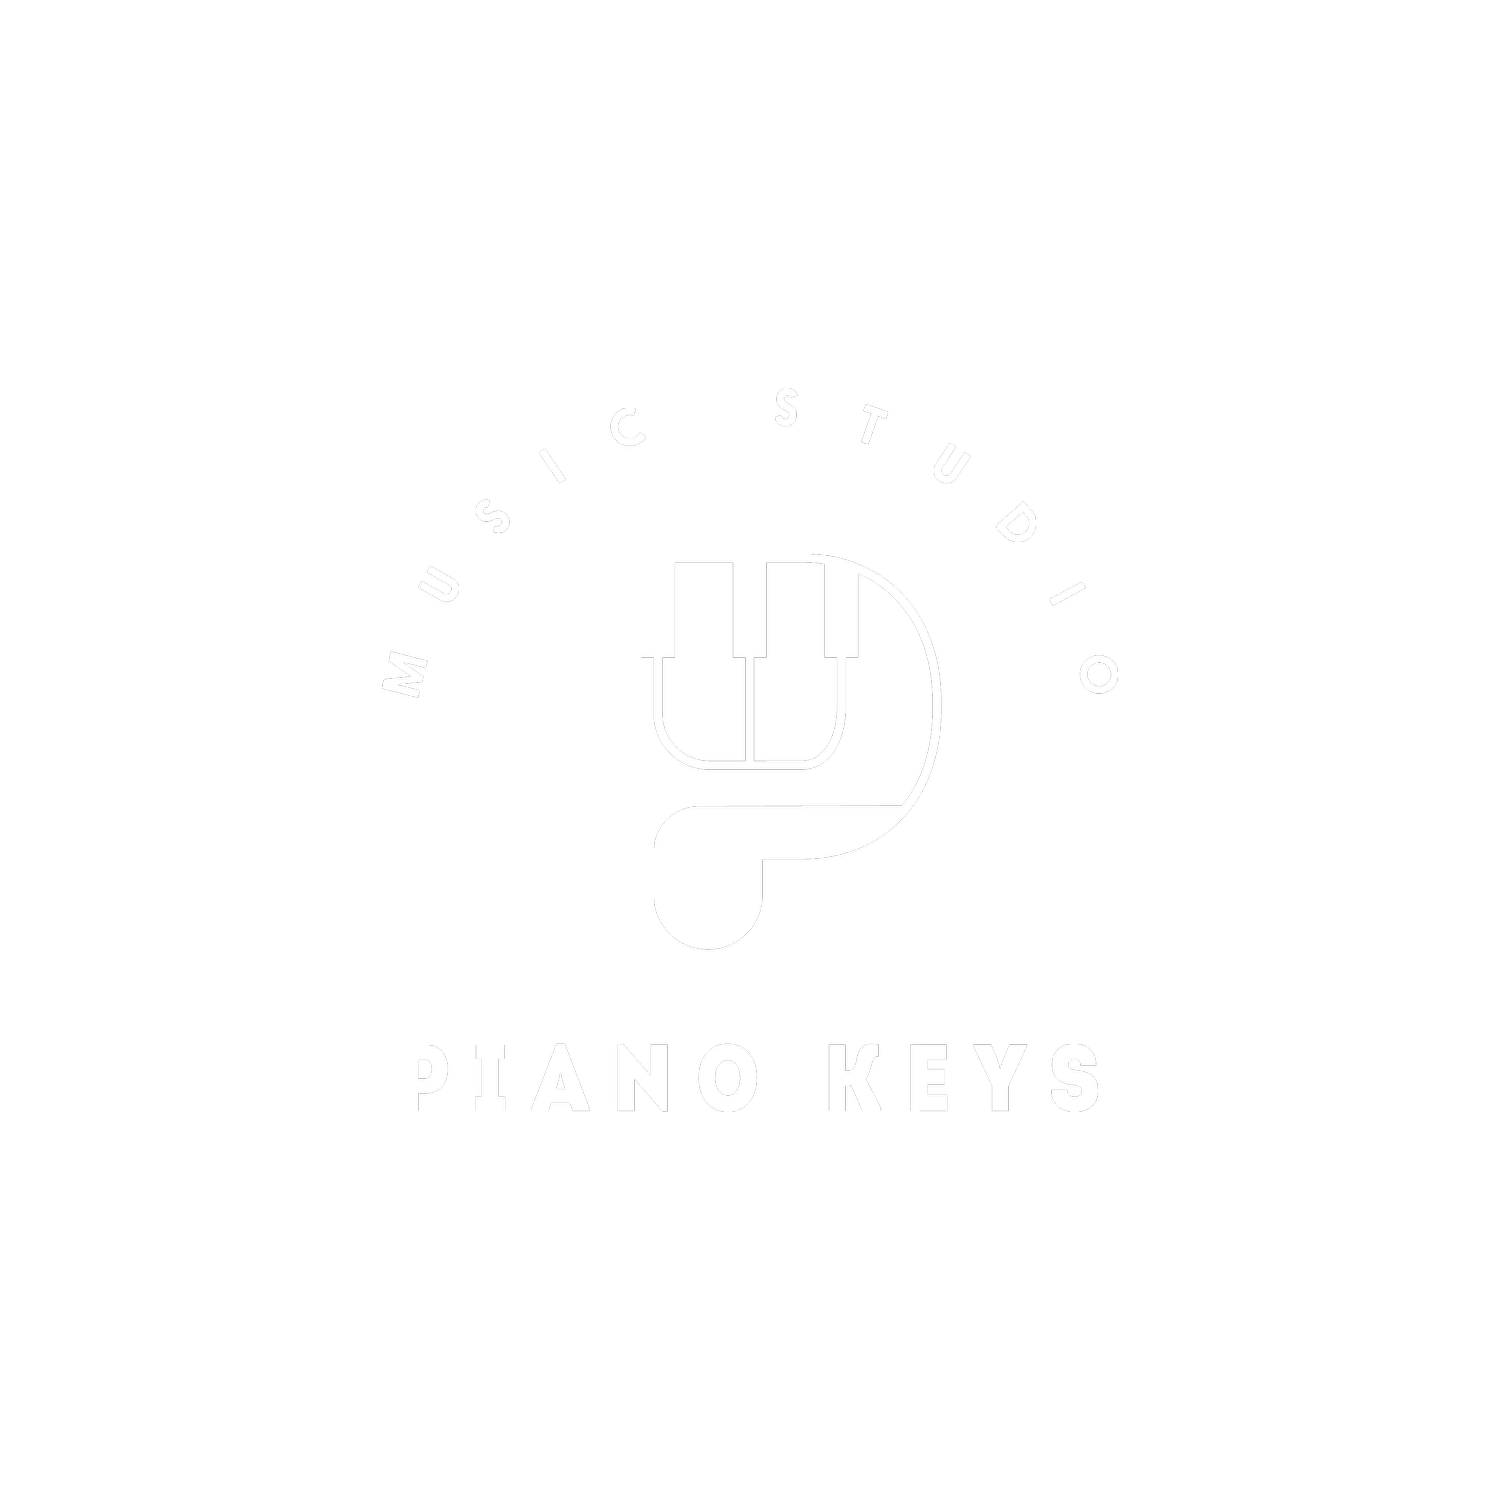 Piano Keys Music Studio